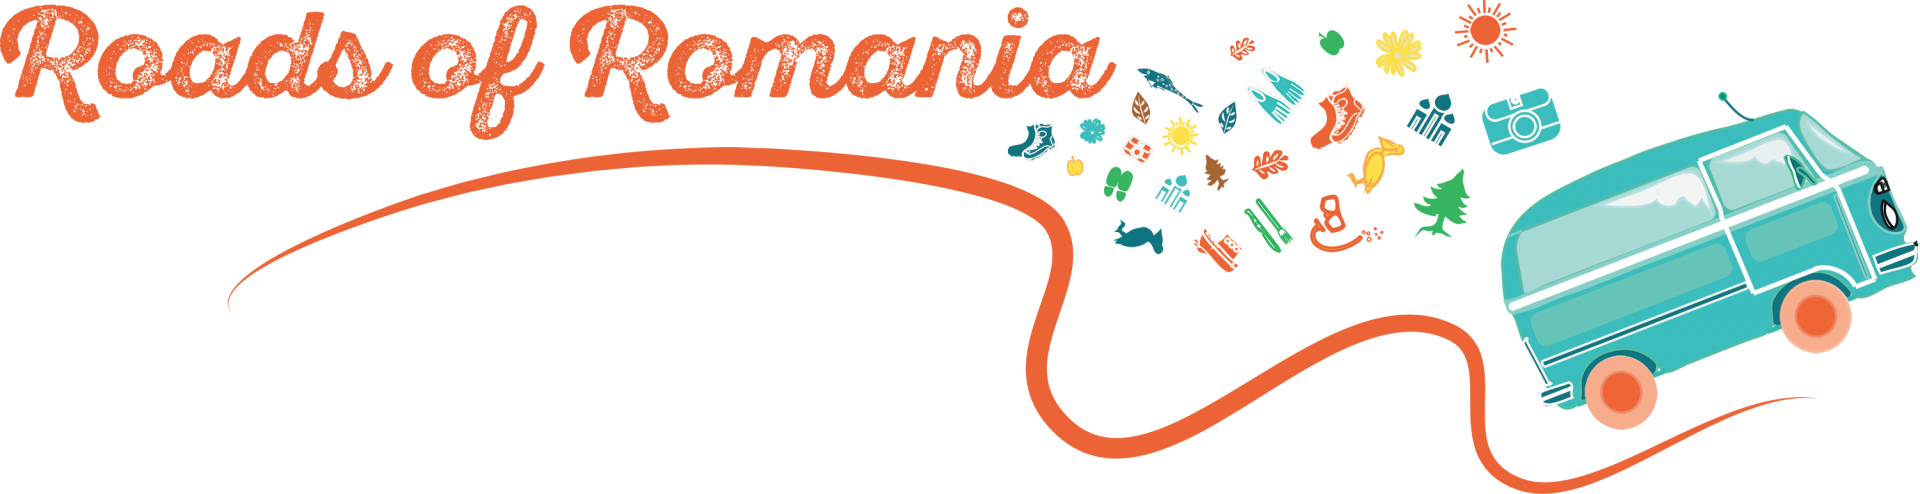 Roads of Romania